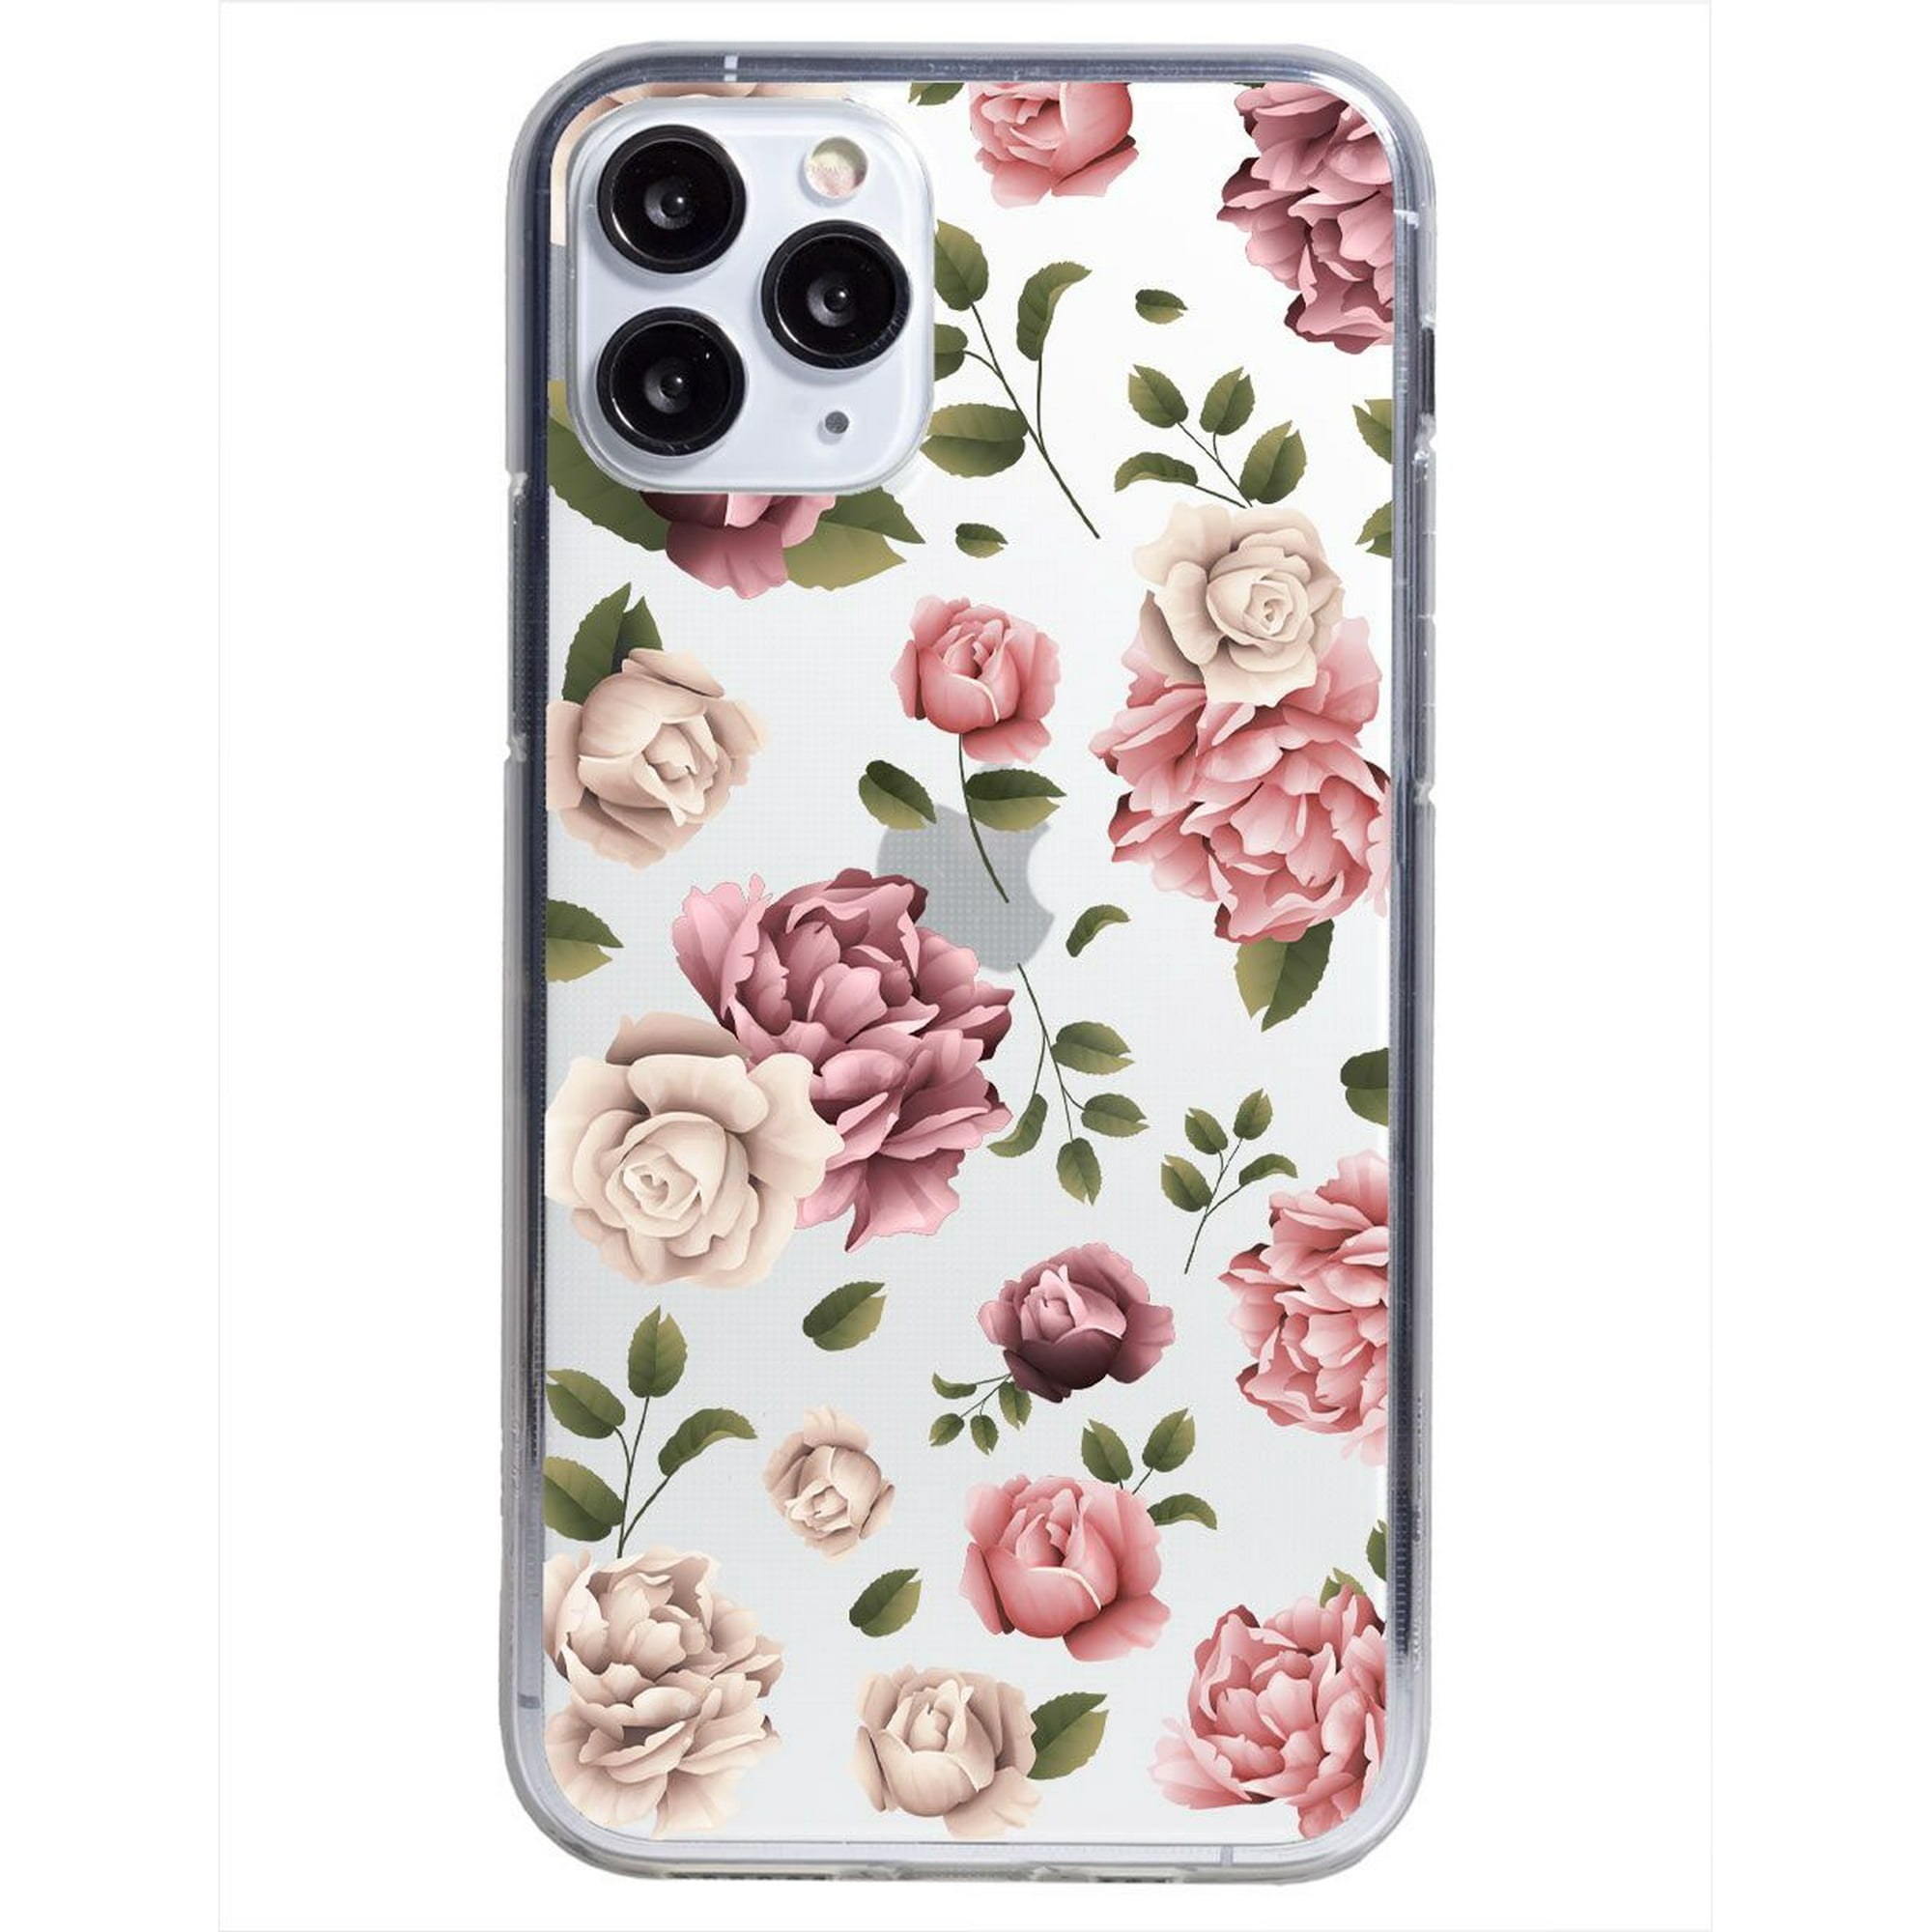 Funda para iphone 11 pro max flores rosas, uso rudo, instacase protector para iphone 11 pro max antigolpes, case flores rosas